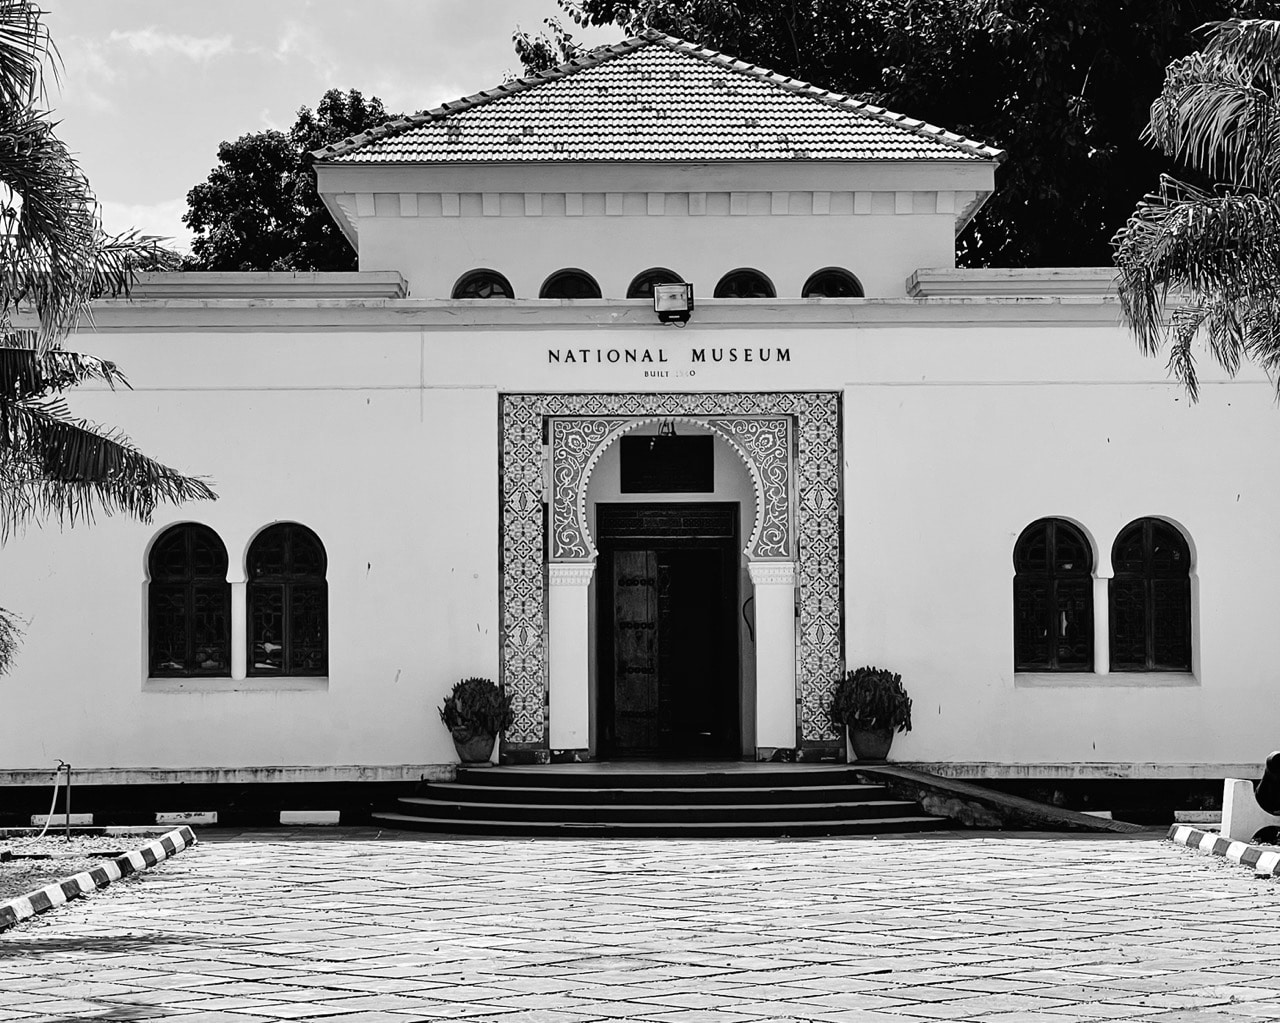 The national museum of Tanzani